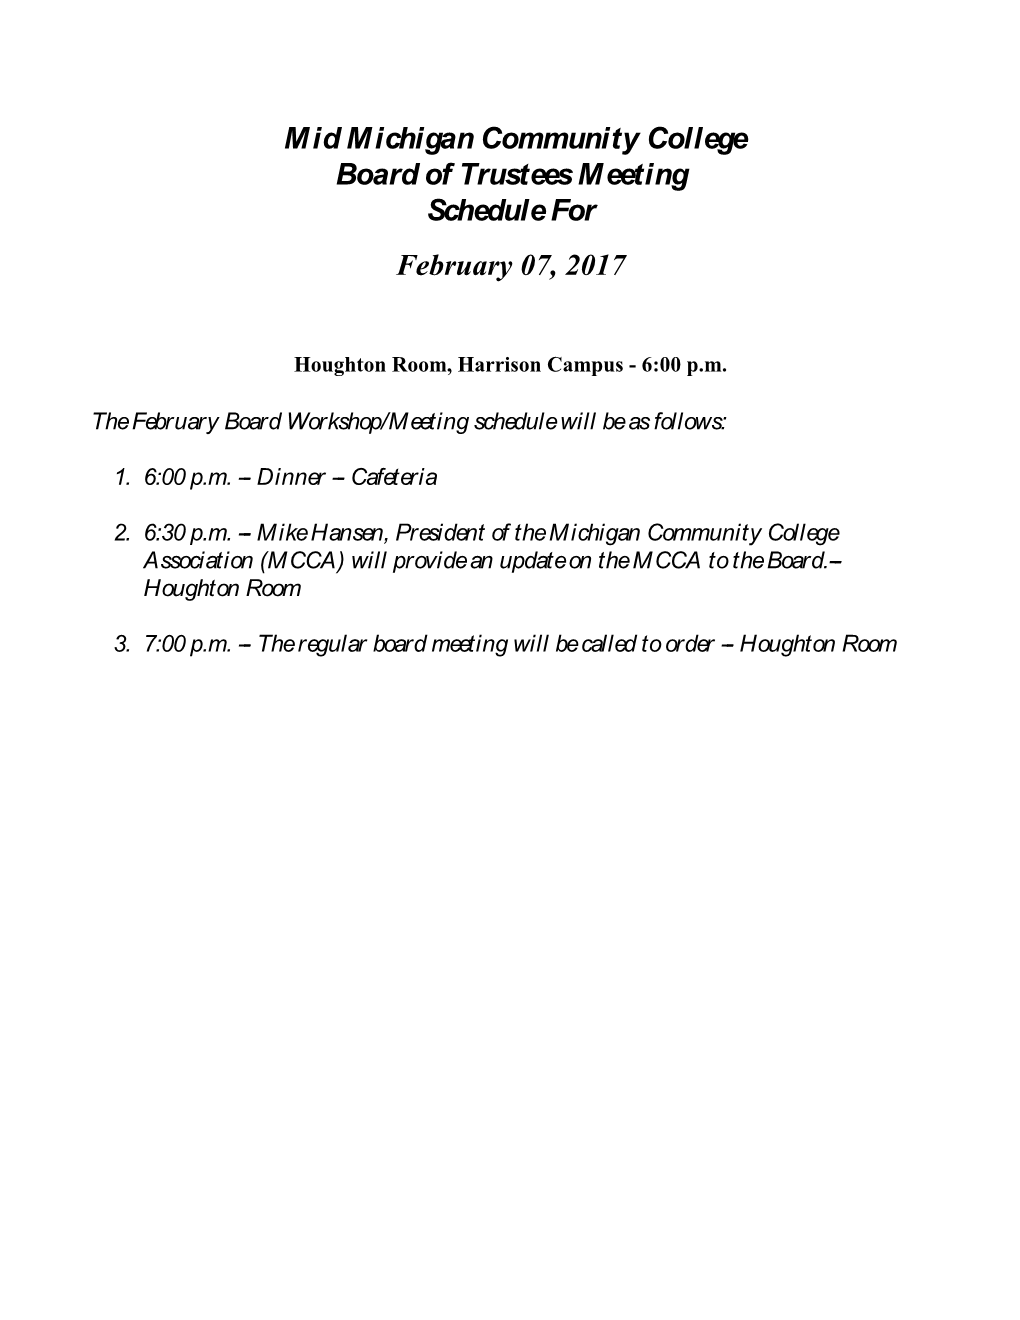 MID MICHIGAN COMMUNITY COLLEGE Board of Trustees Regular Meeting Harrison, MI 48625 and Mt